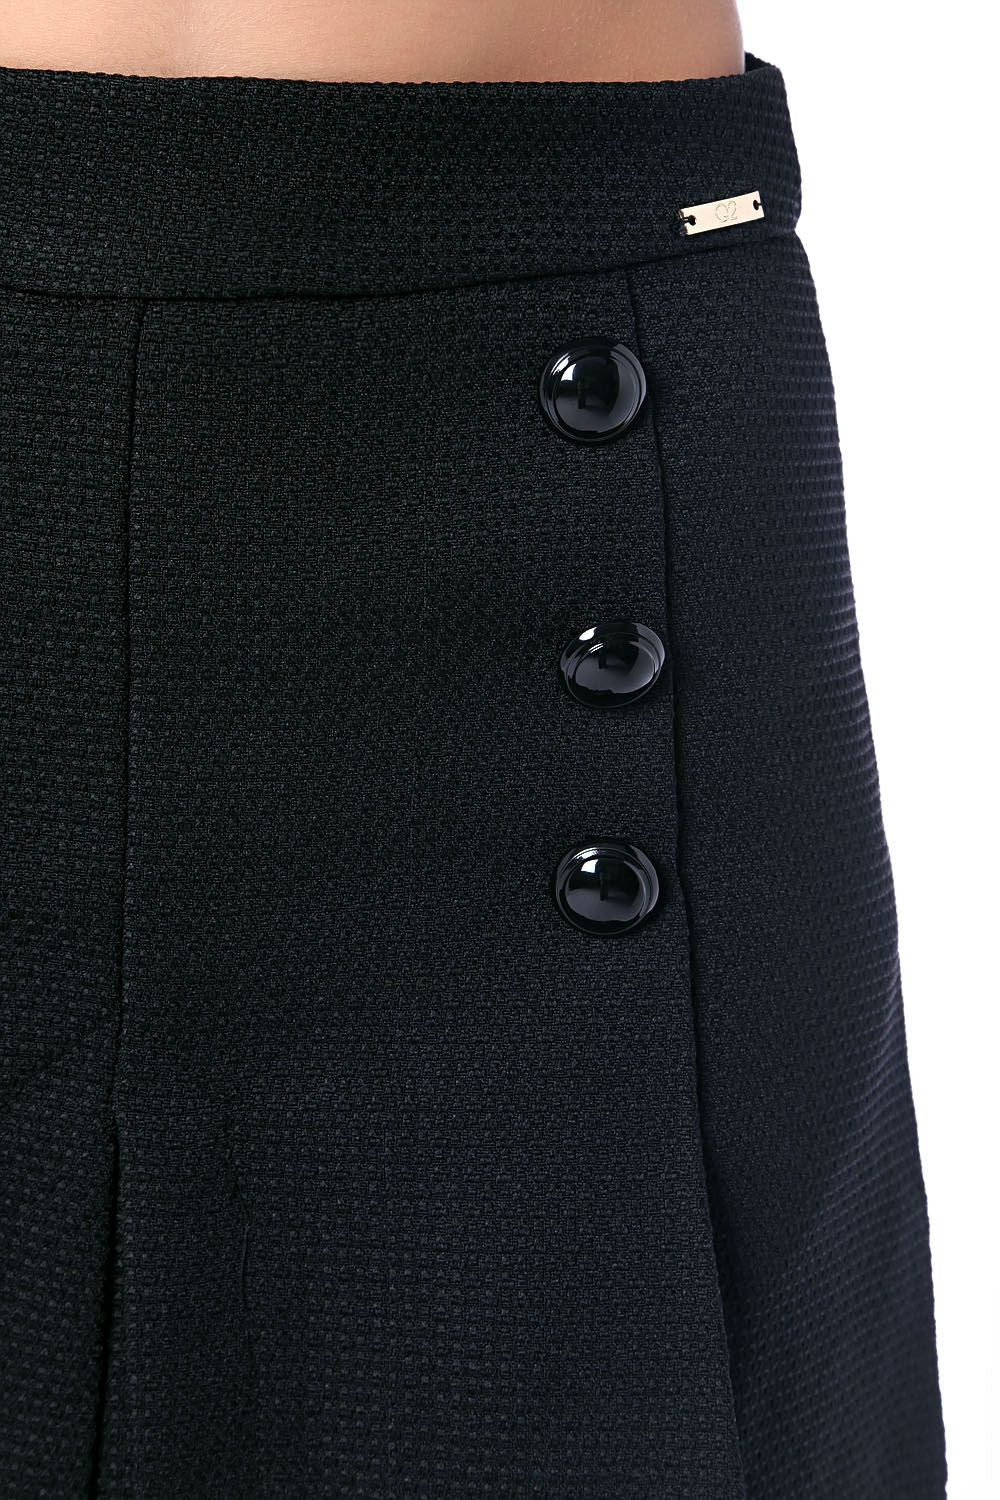 Black mini skirt with black button detail - Szua Store